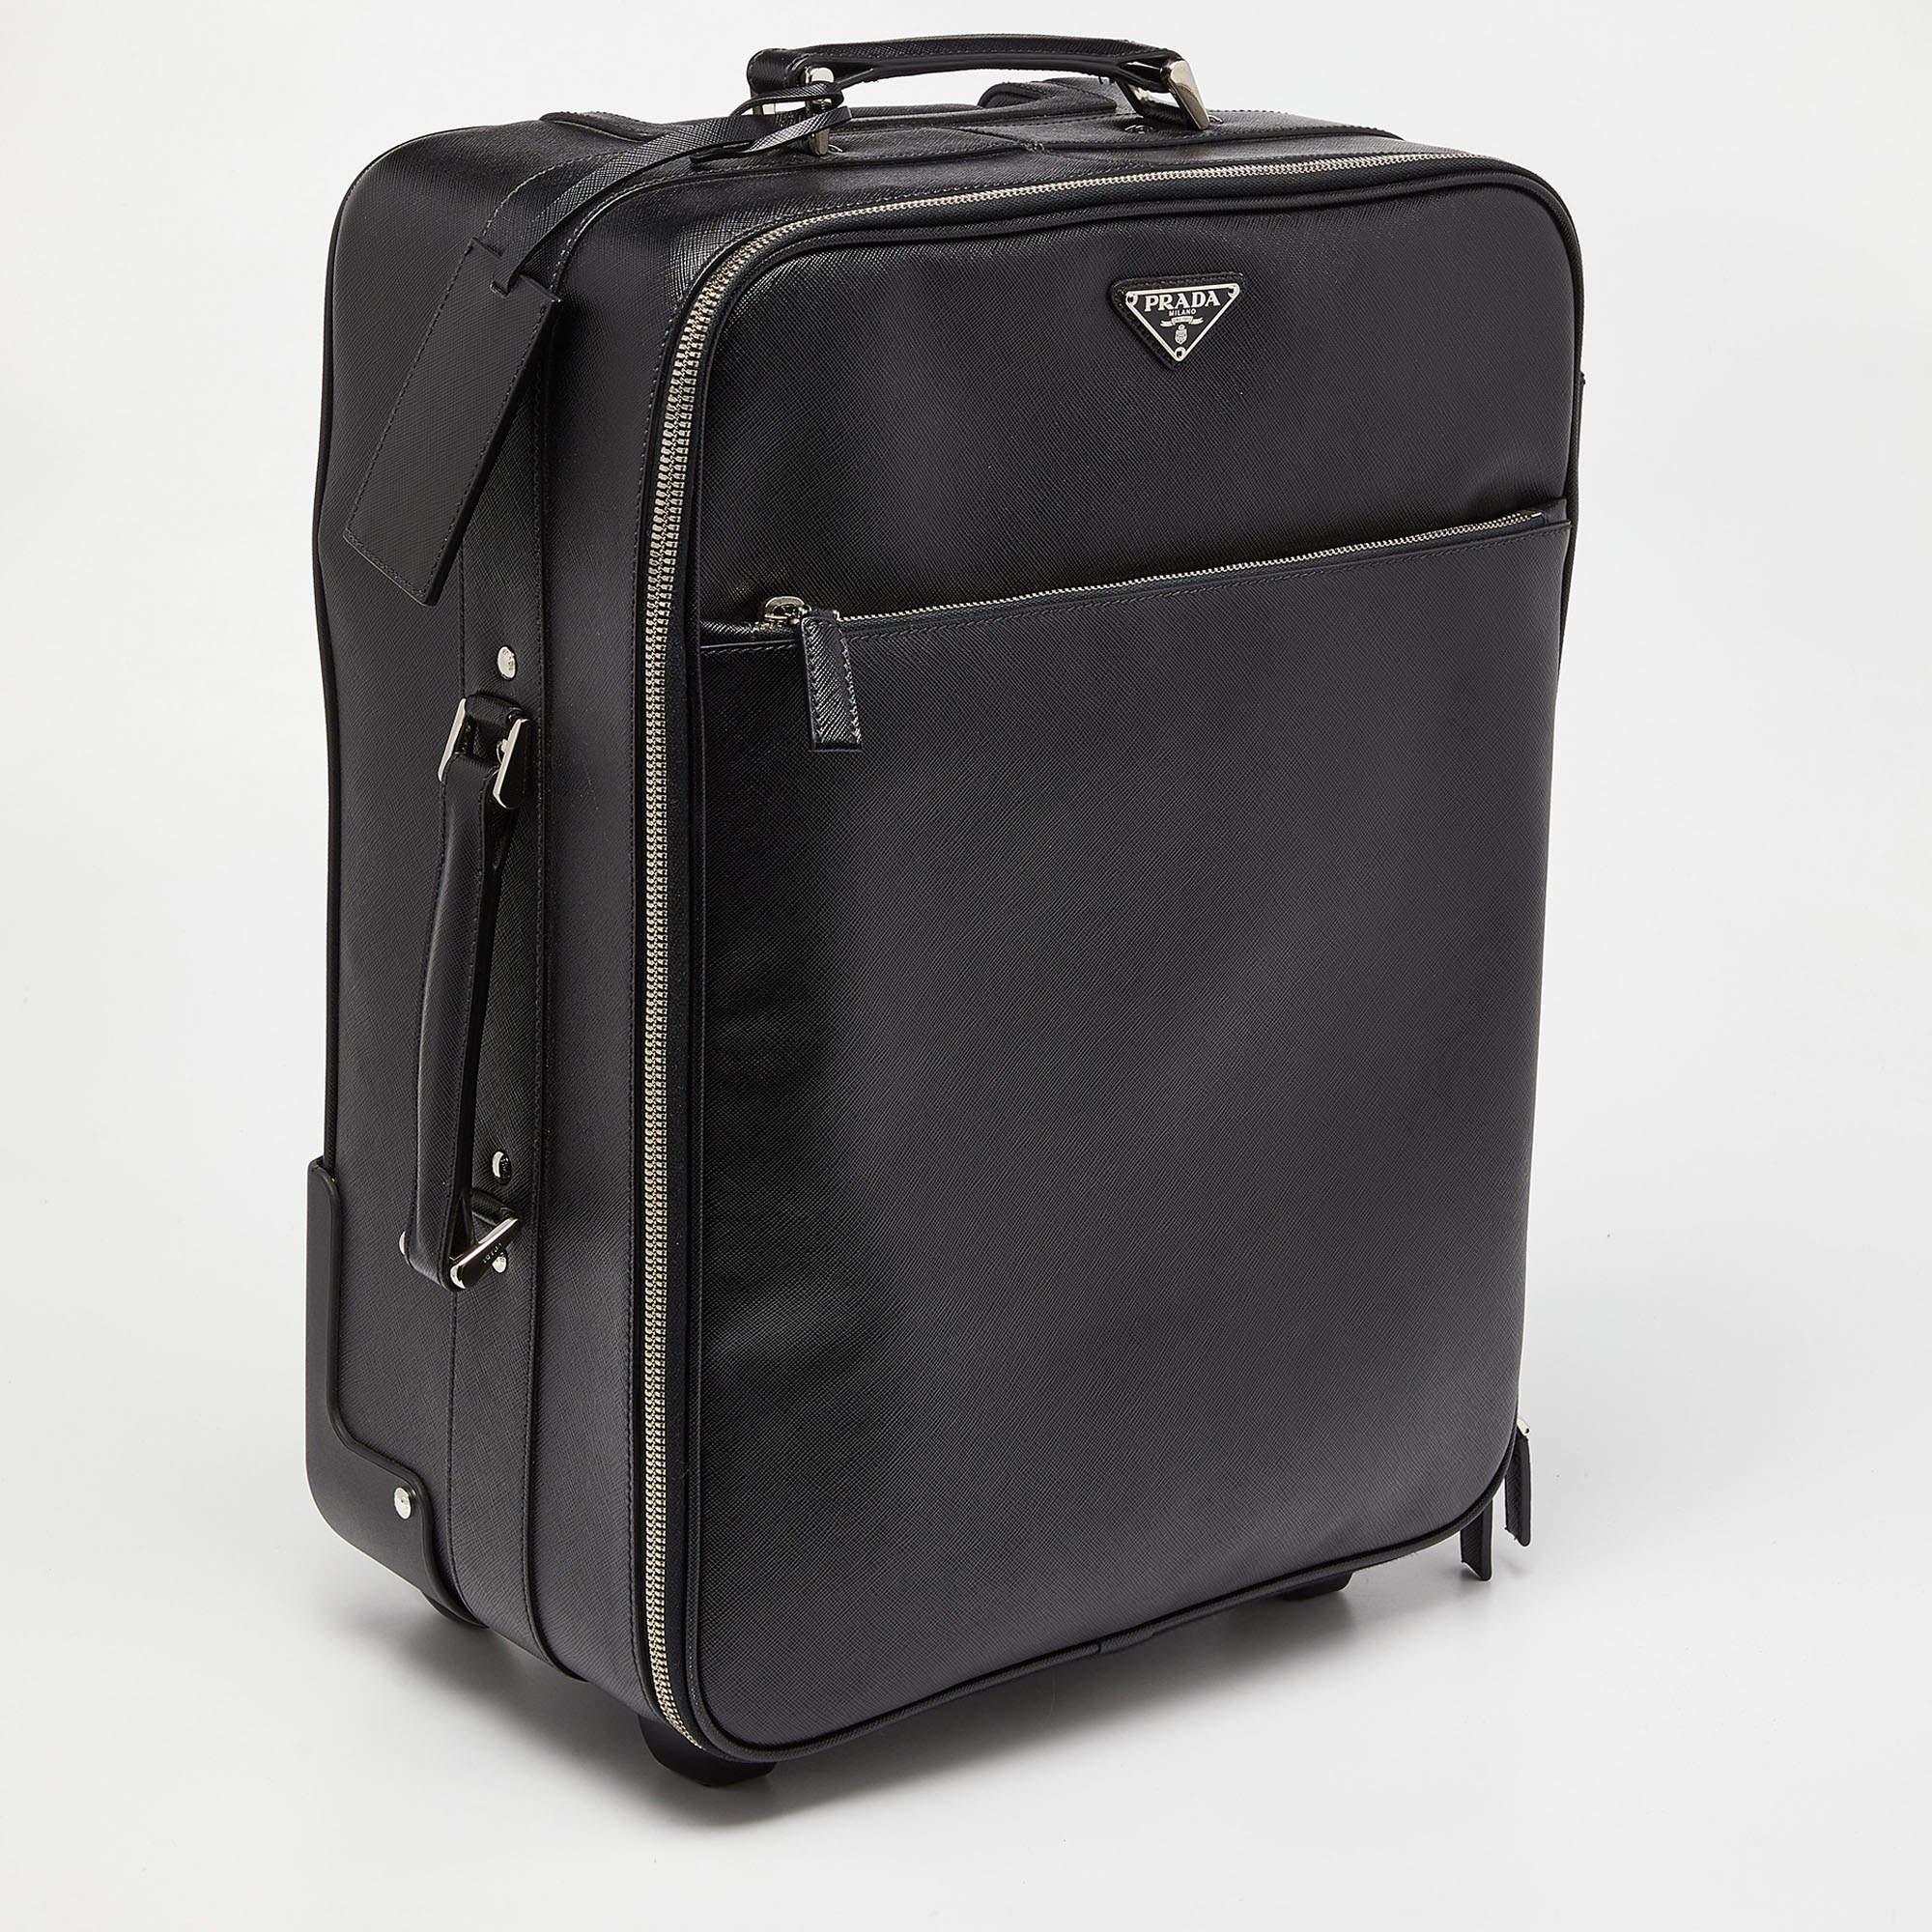 Prada Black Saffiano Leather Travel Rolling Trolley Luggage For Sale 4